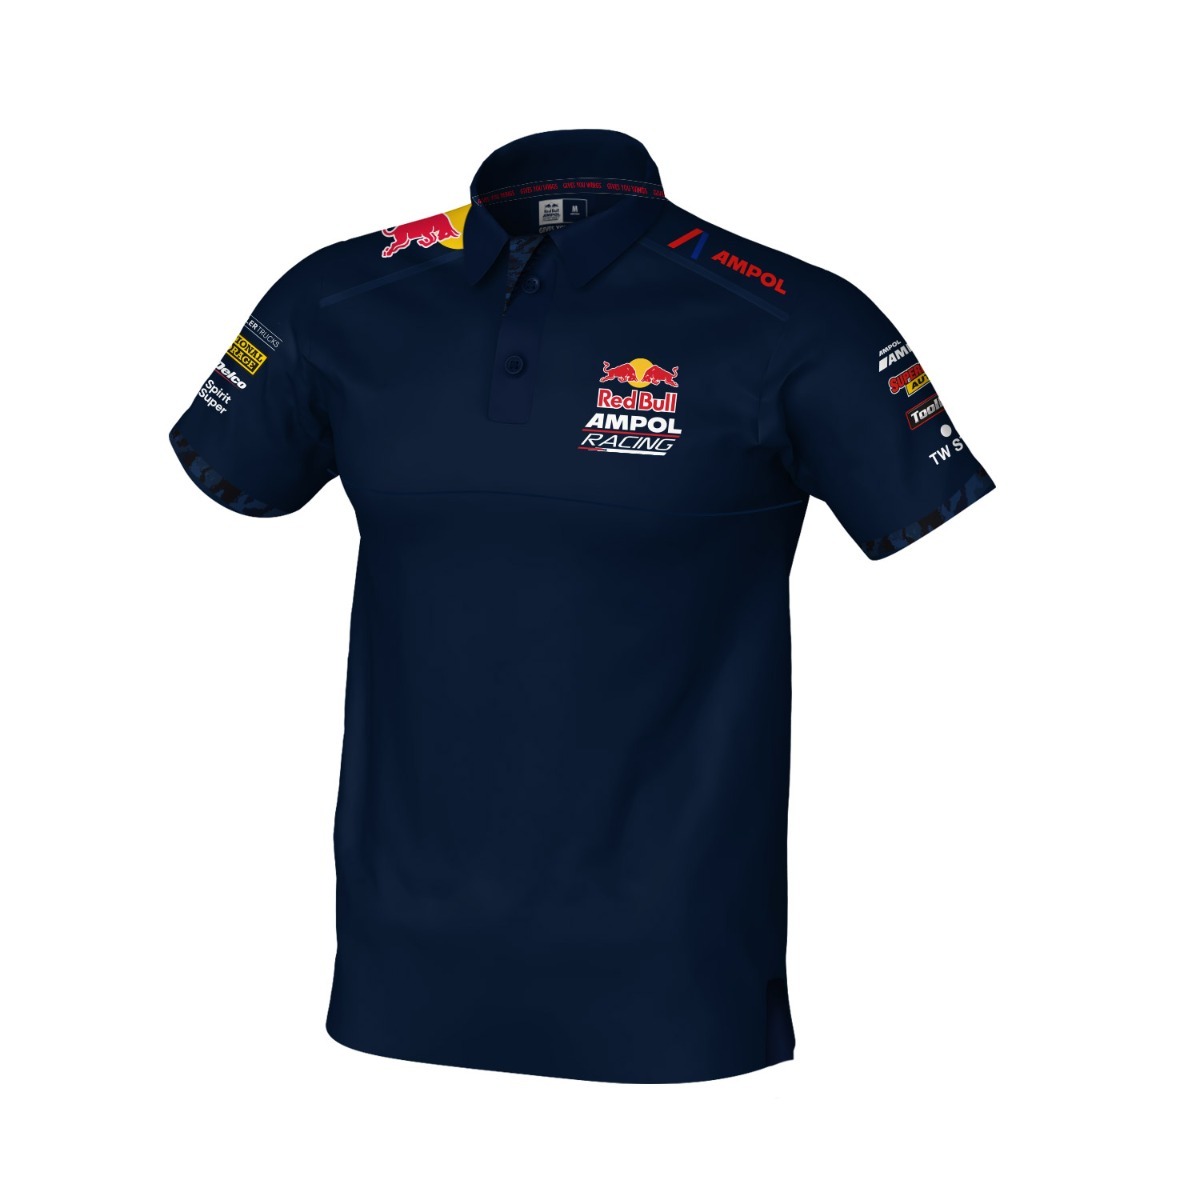 Red Bull Ampol Racing - Australian V8 Supercars, Triple 8 Members